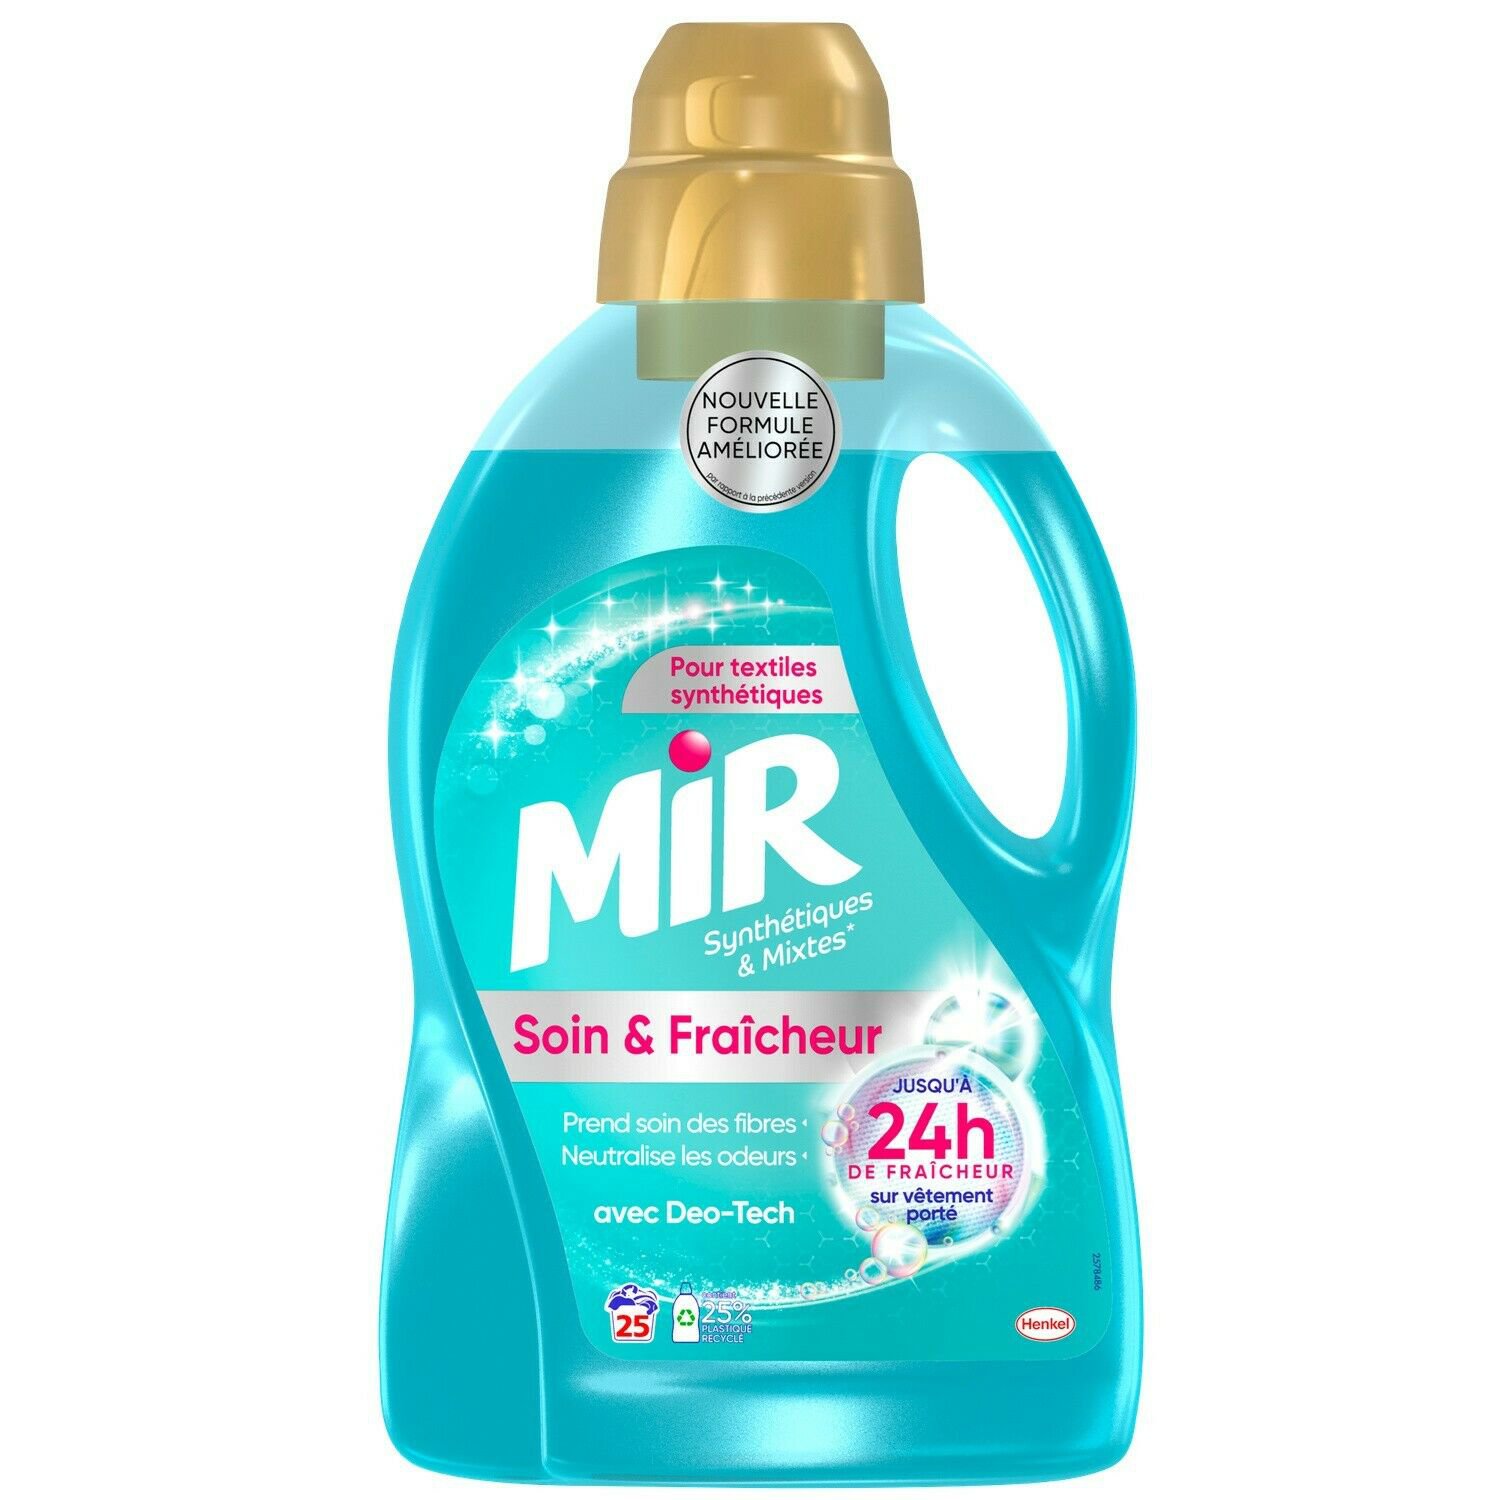 Care & Repair MIR 1.5 liter detergent